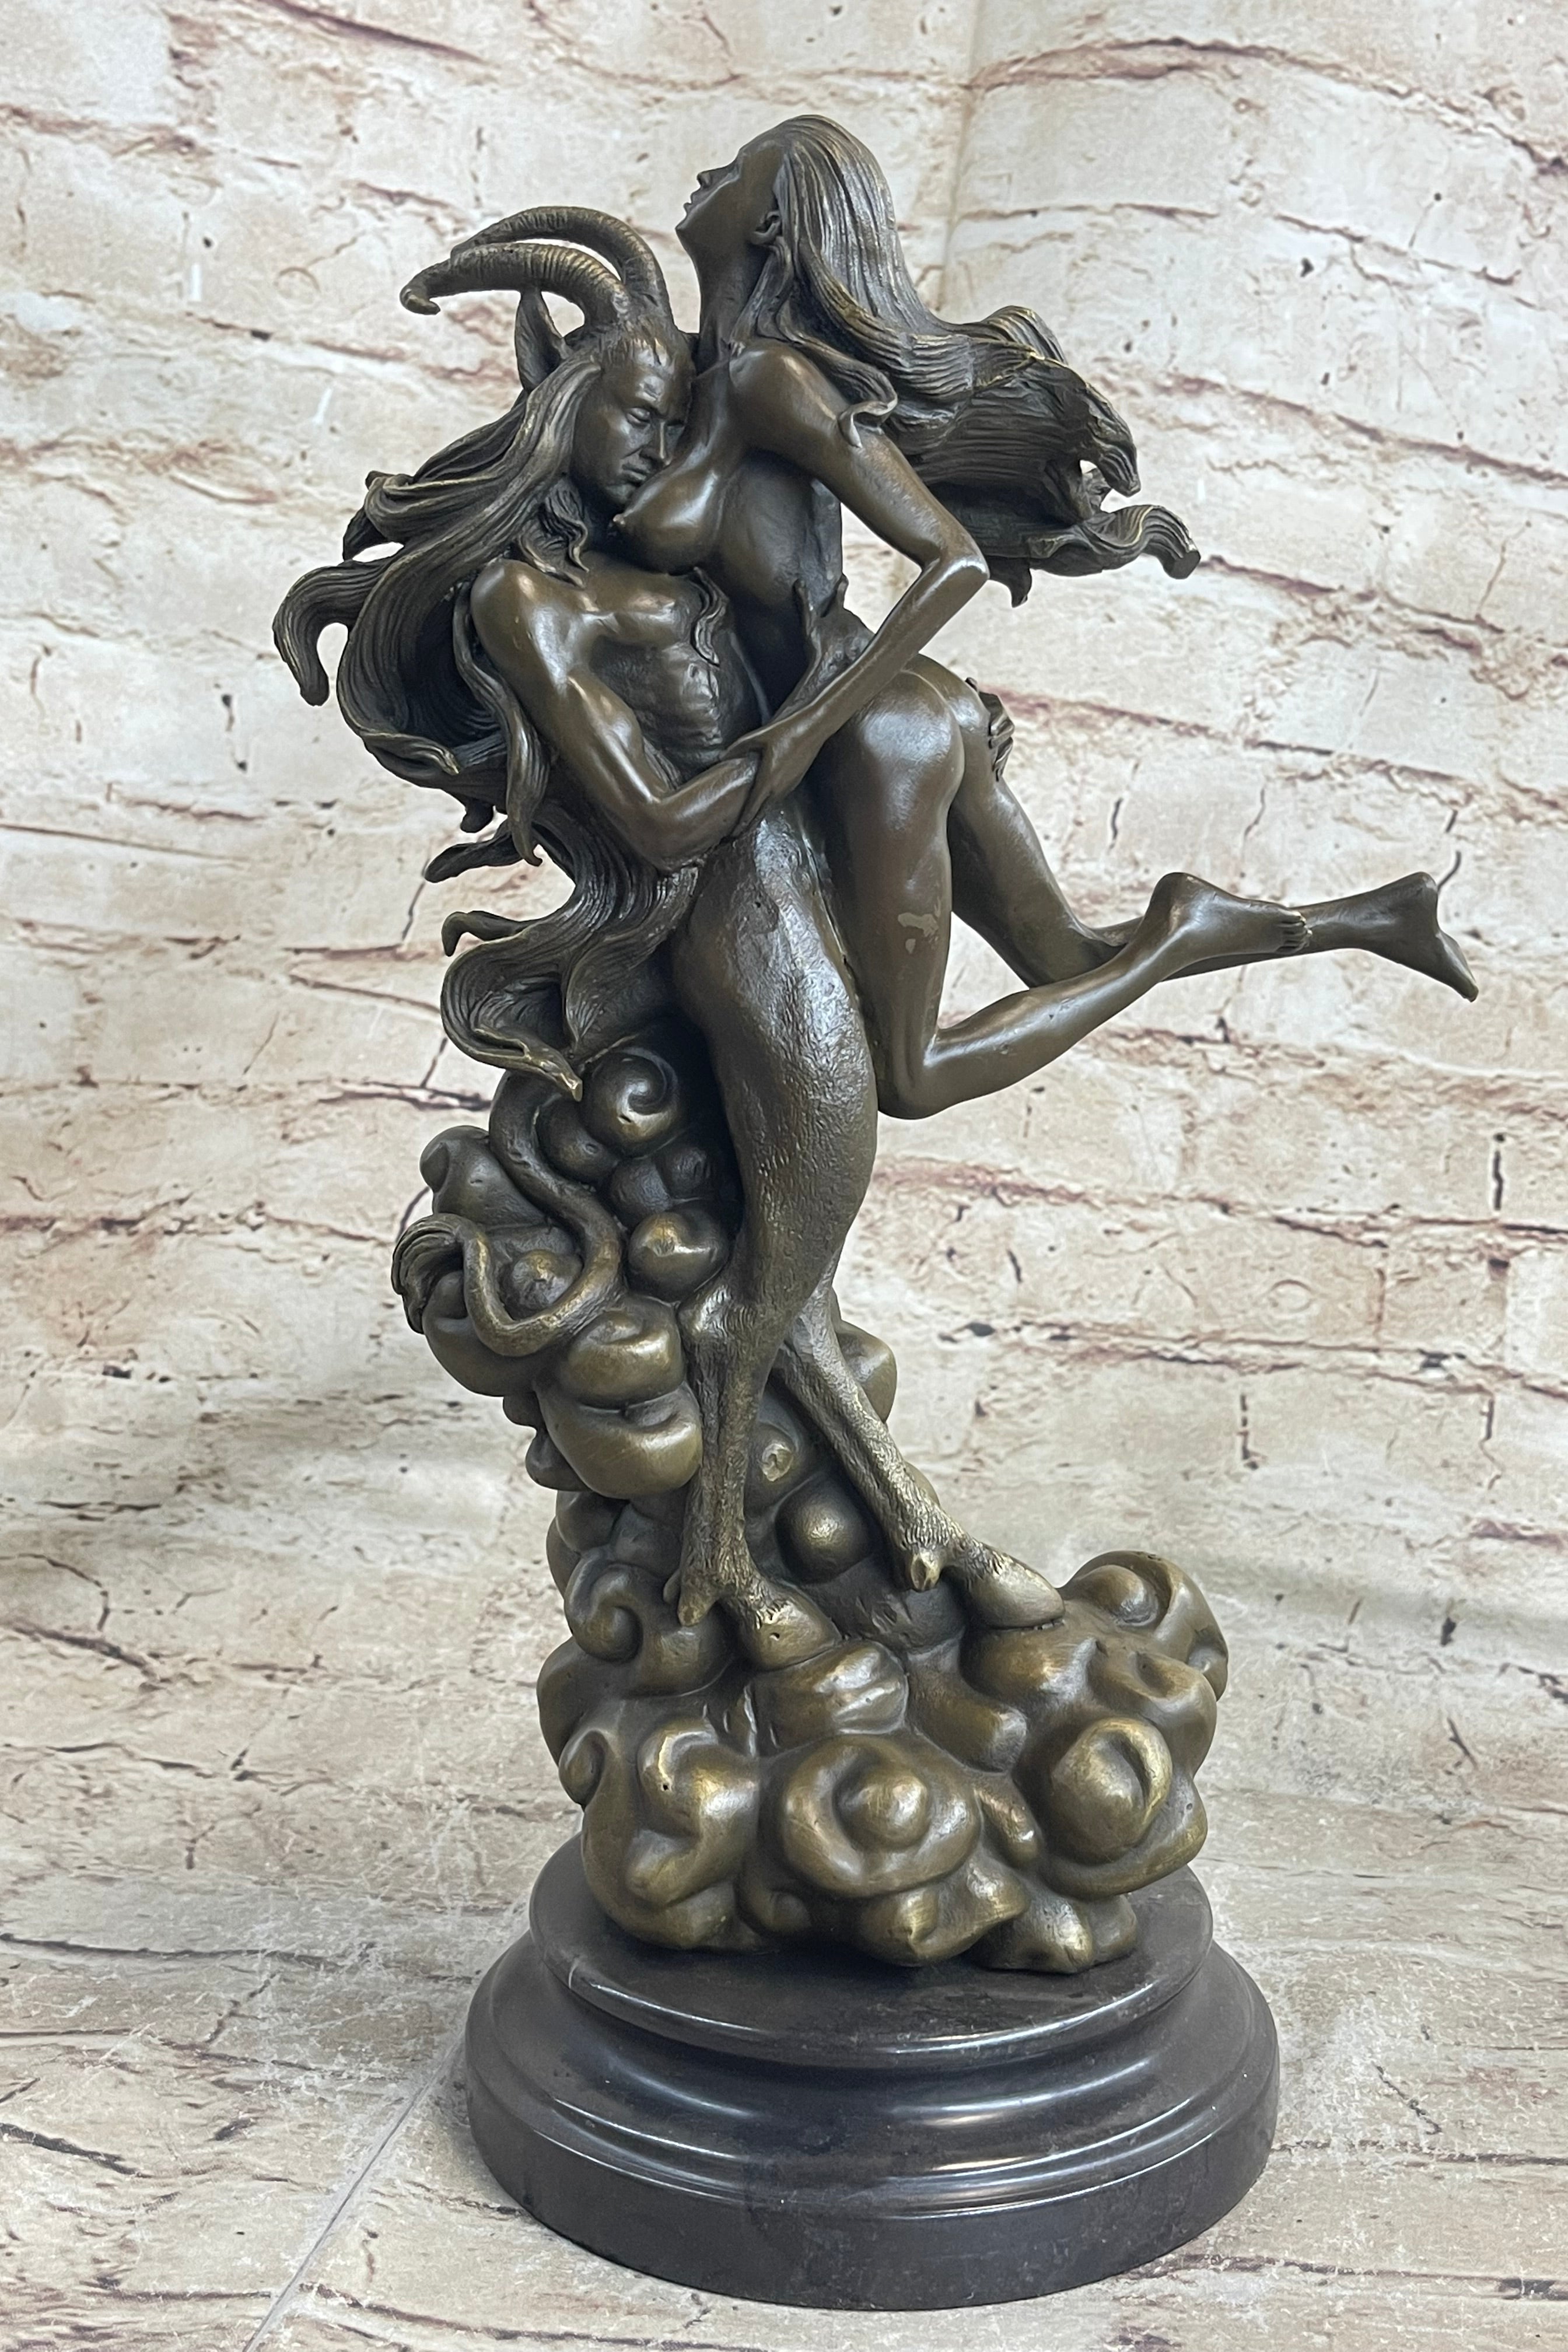 Devil and Nude Female Classic Bronze Sculpture Marble Base Figurine Decoration